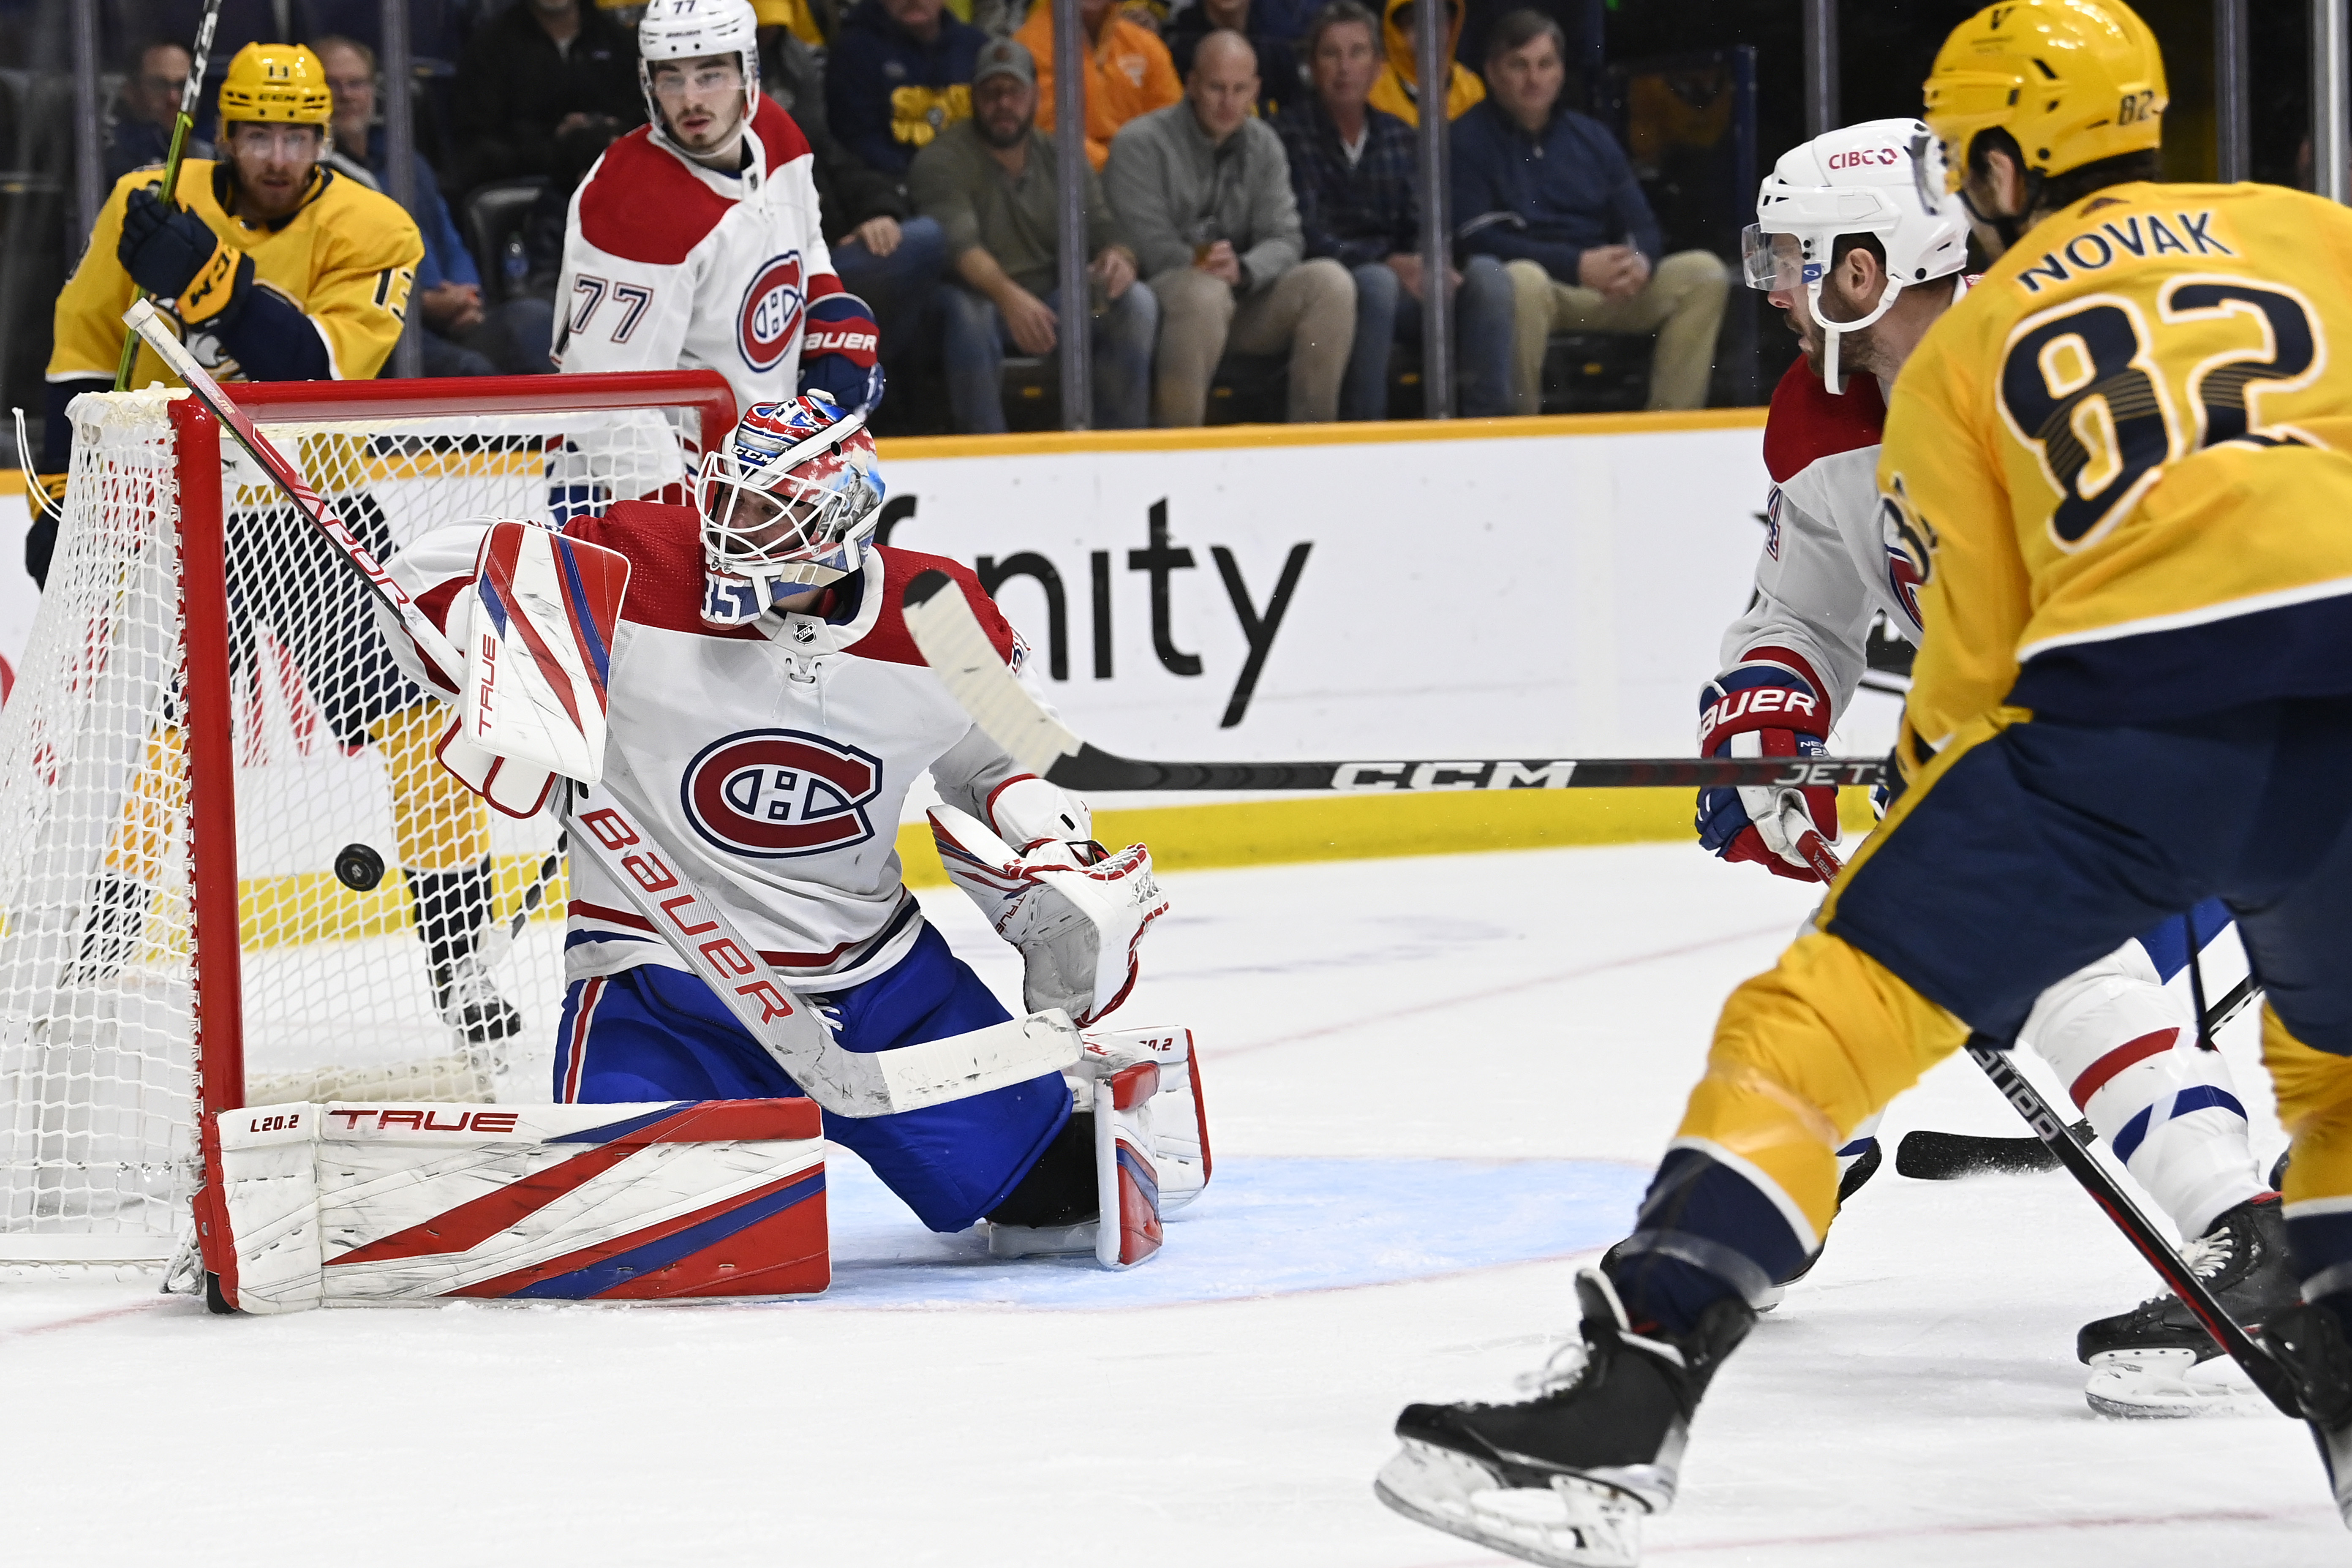 Summit Series opened eyes around the world, Canadiens great Savard says